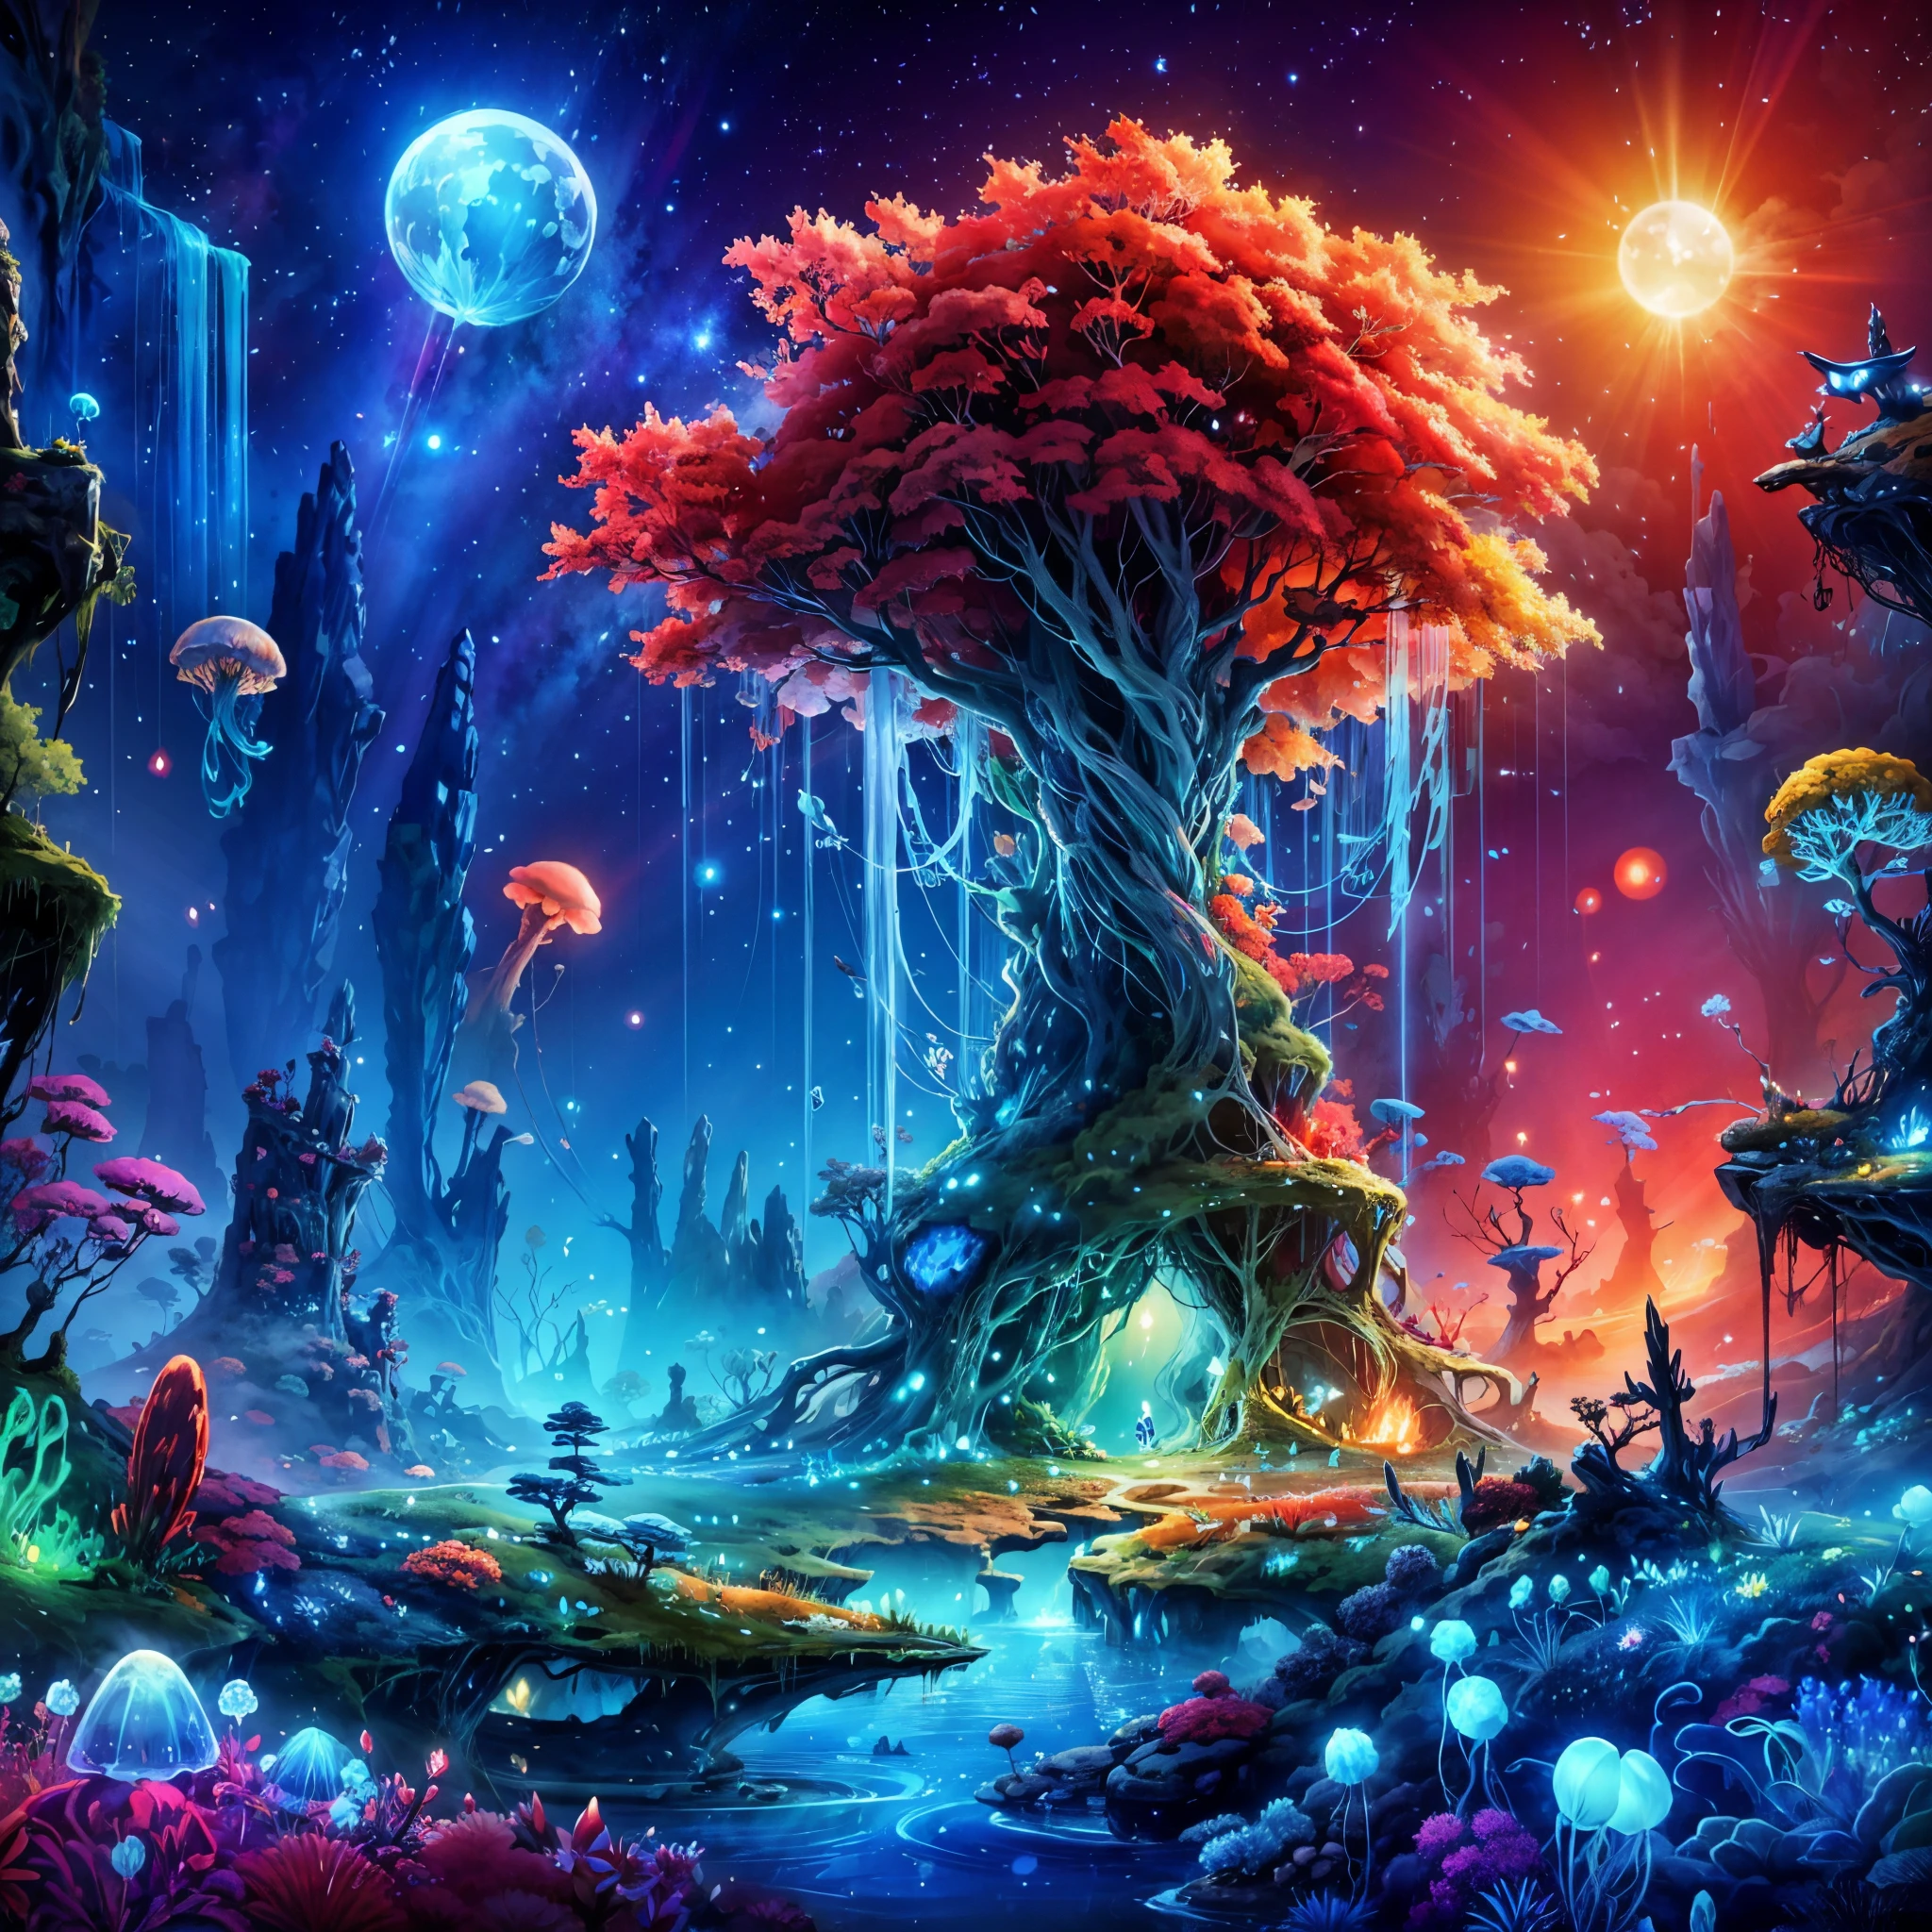 Ori 与黑暗森林 游戏风格,超詳細, 外星景观, 奇怪的树, 鲜艳的红草, 蓝色仙人掌,綠色極光, (漂浮的水母),橘色的星空, 流星,天然巨型穿孔水晶柱,飘逸的蓝叶, 巨型黄色发光蘑菇, 迷人的熔岩线, 独特的杂交花, 两颗璀璨的太阳, 以及迷人的红色萤火虫.